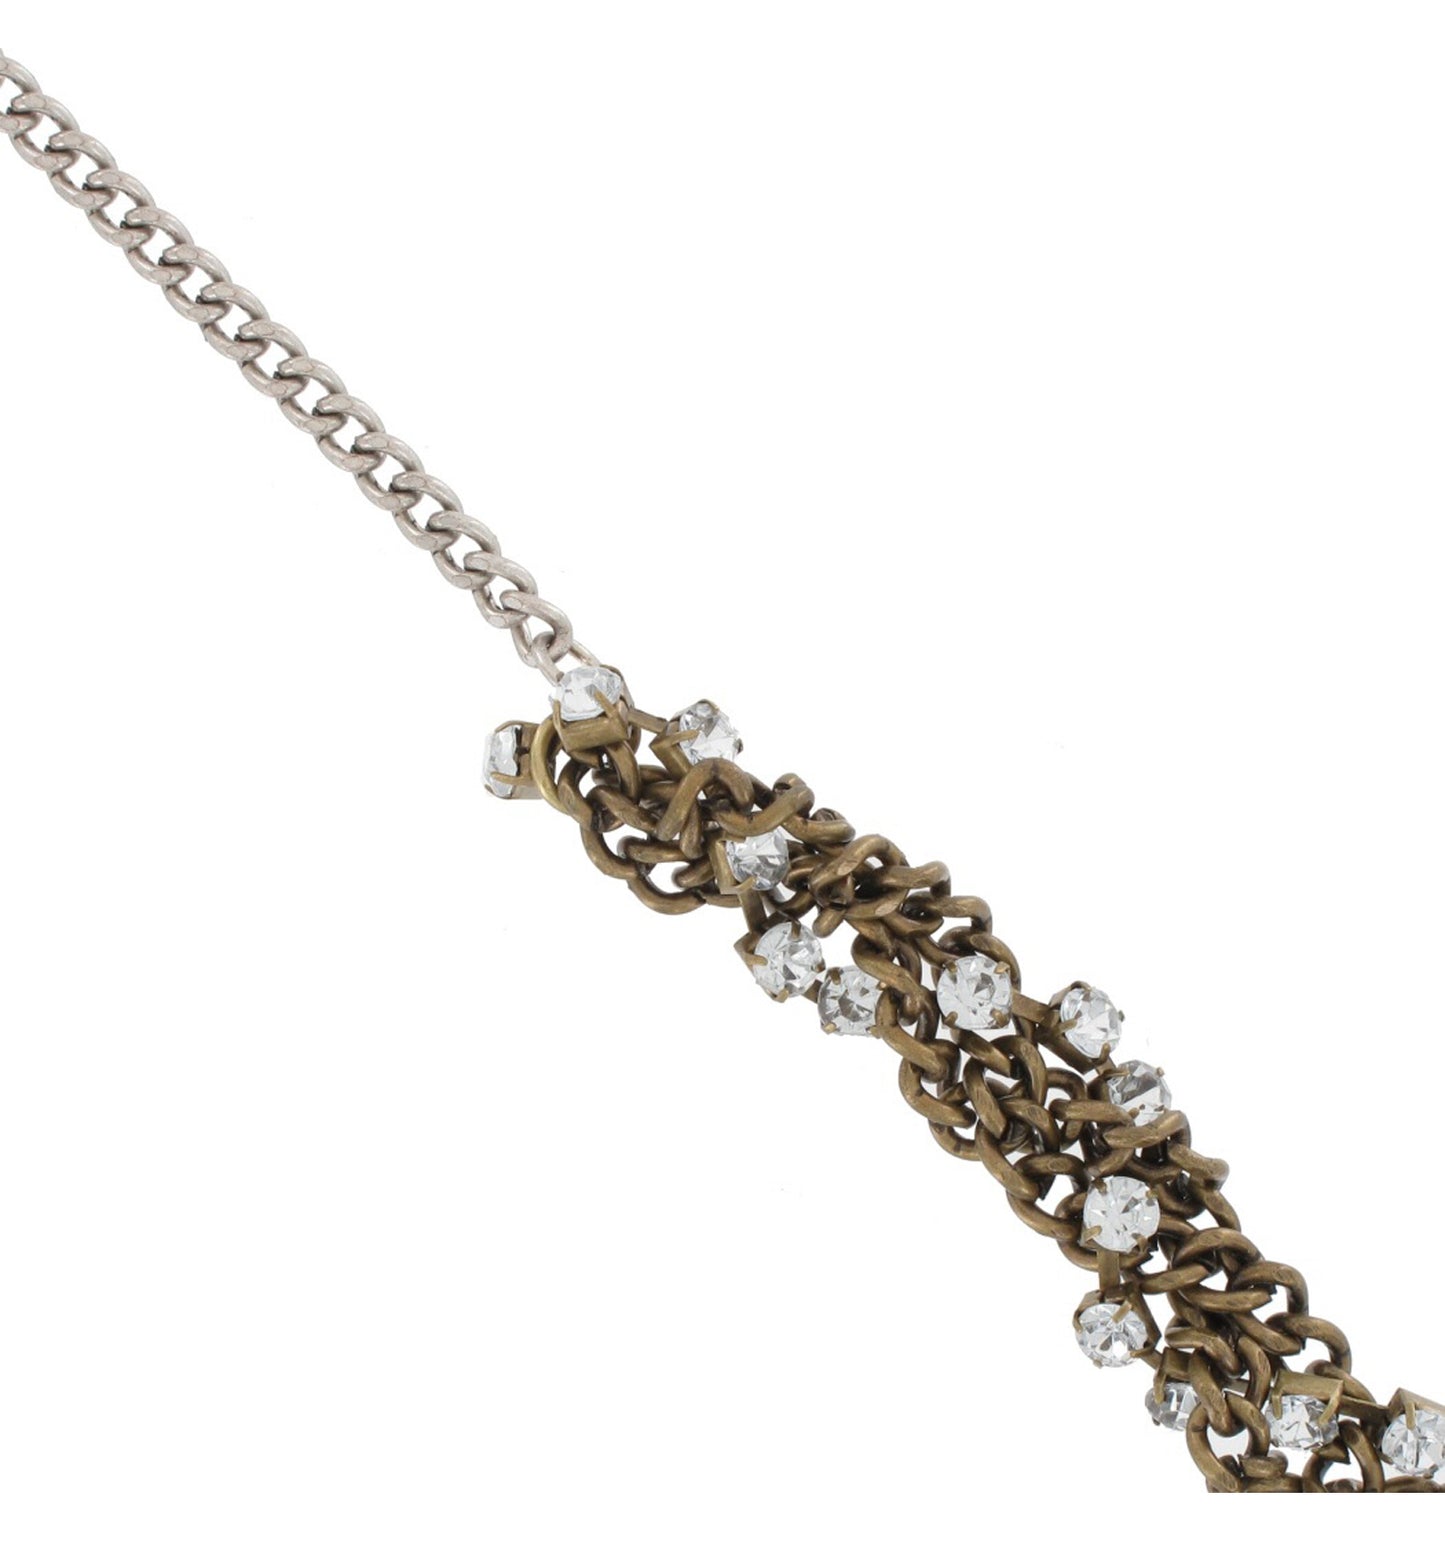 Necklace Chain New Gold Tone Rhinestone Multistrand Long 30"